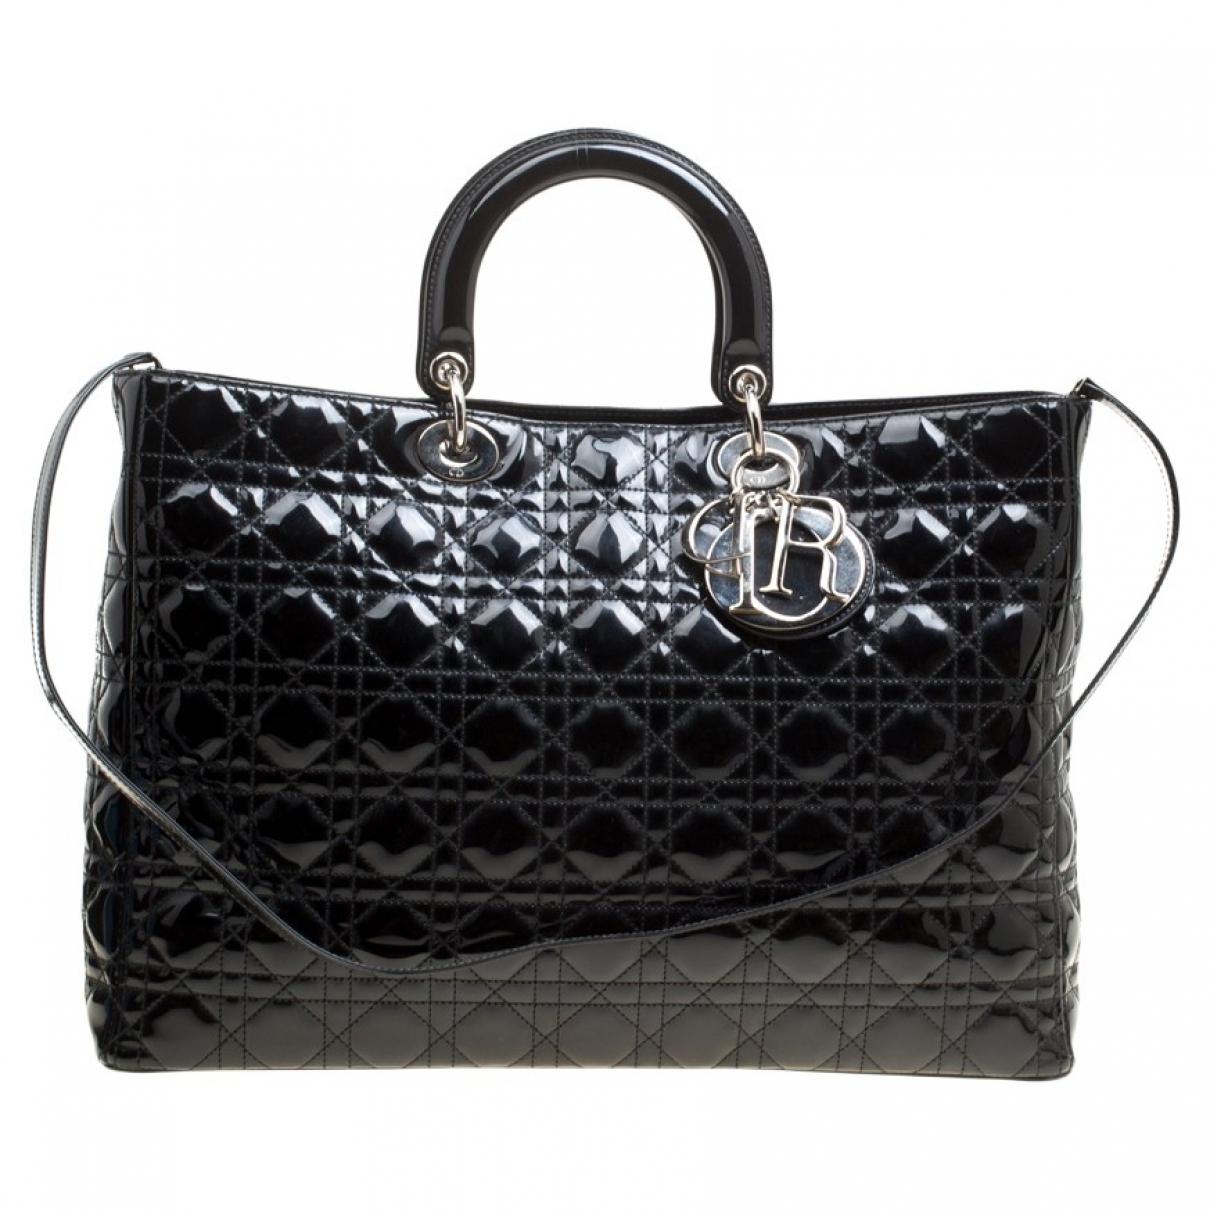 Lyst - Dior Black Patent Leather Handbag in Black